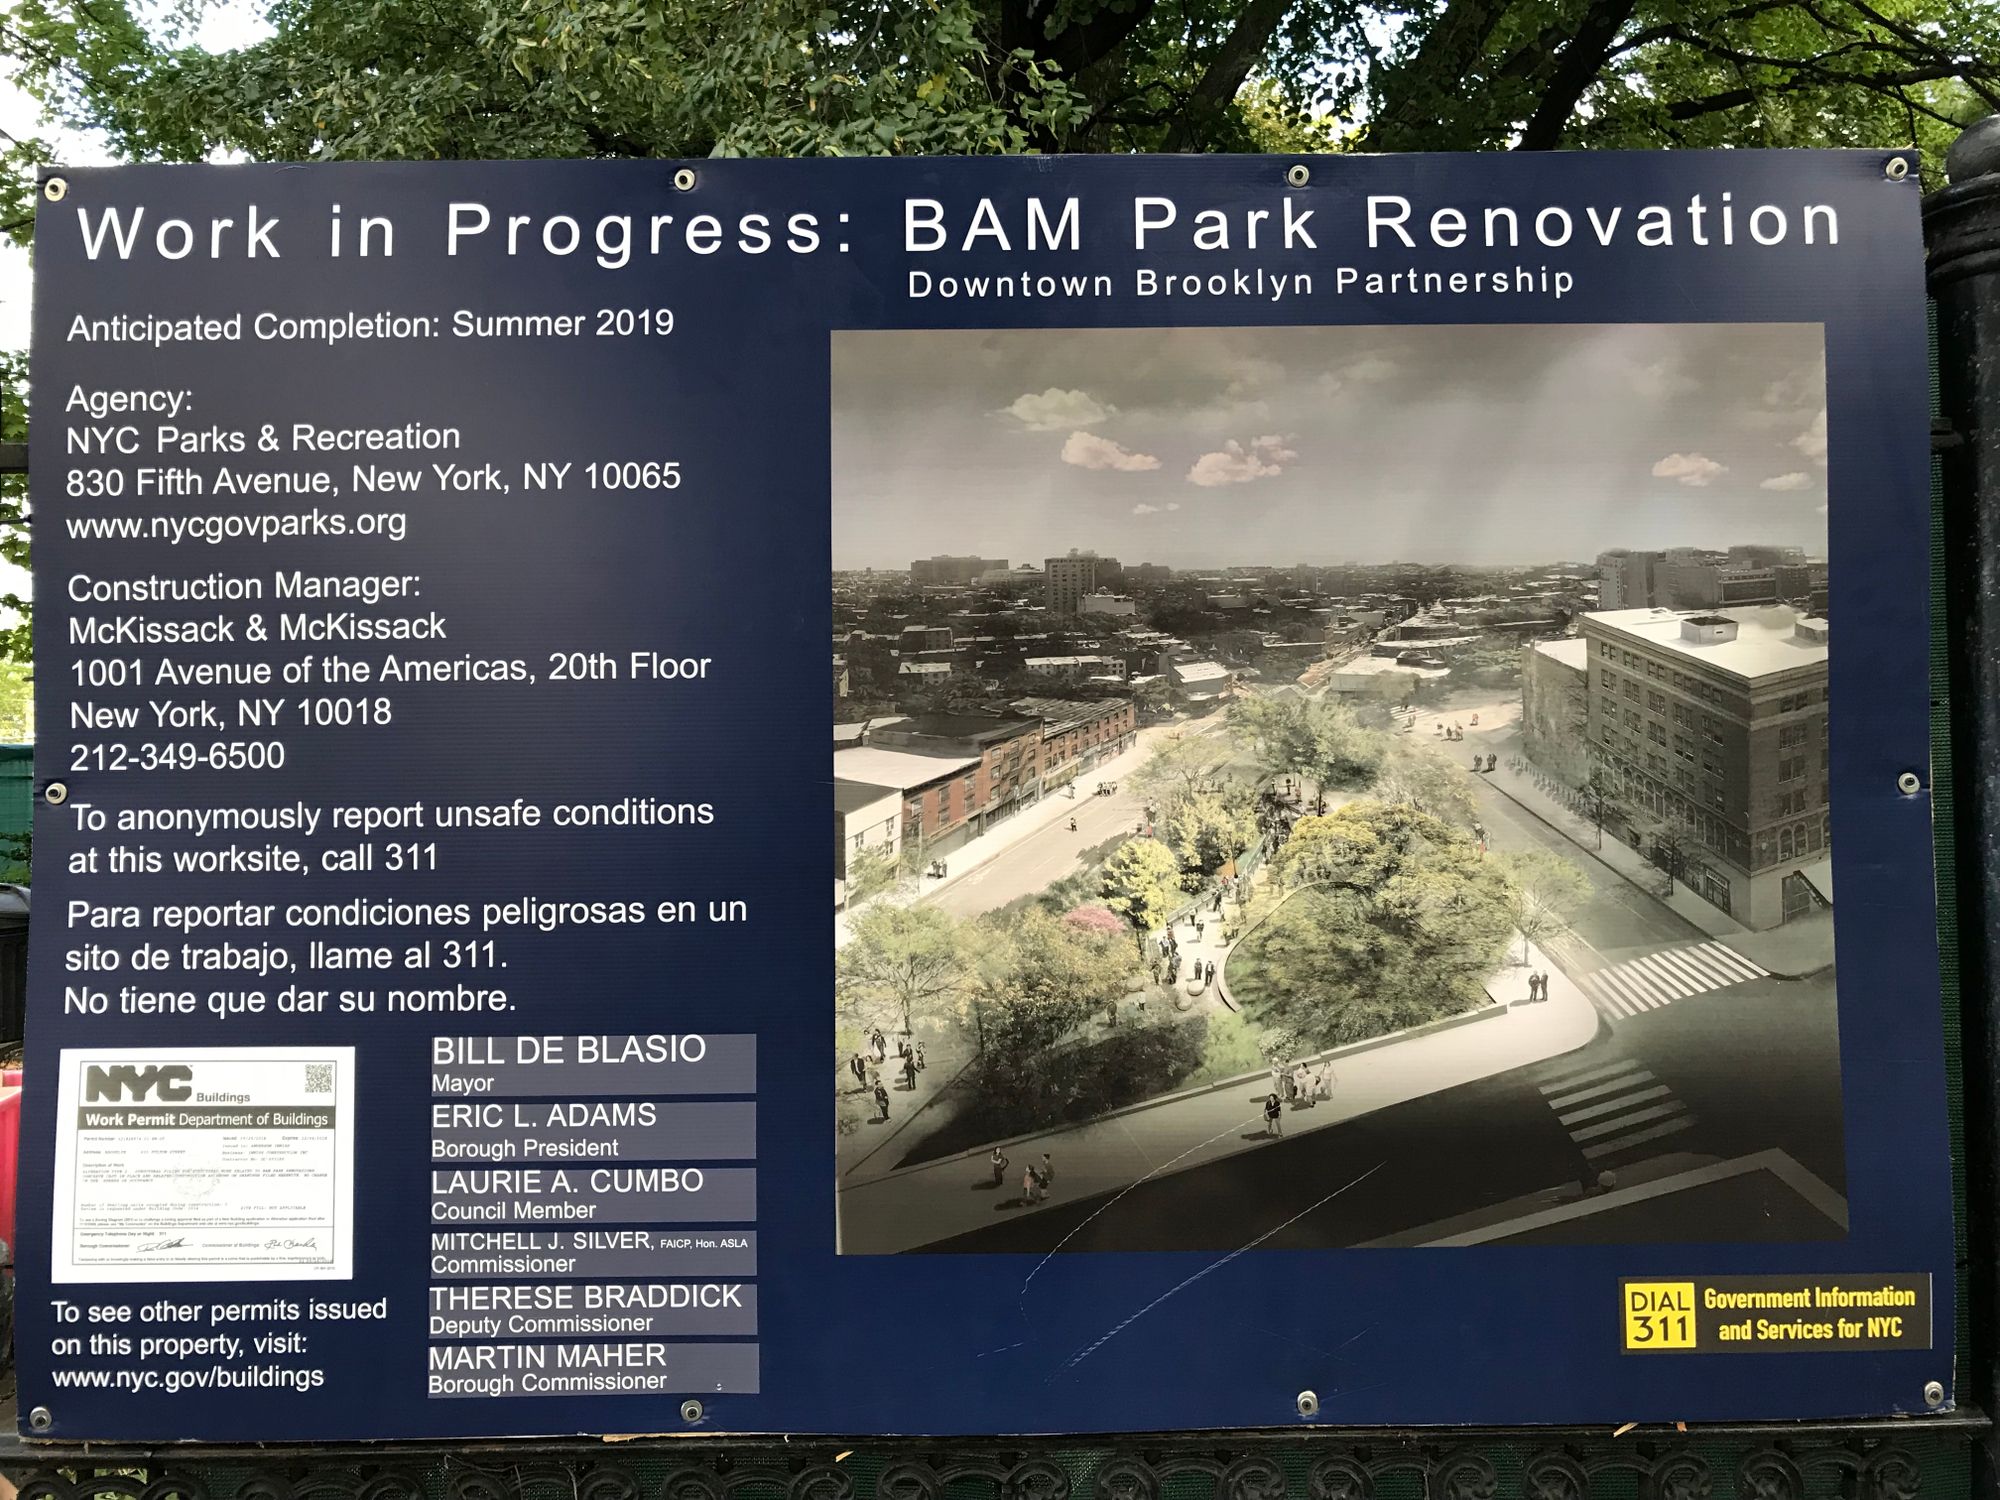 Construction Begins at BAM Park